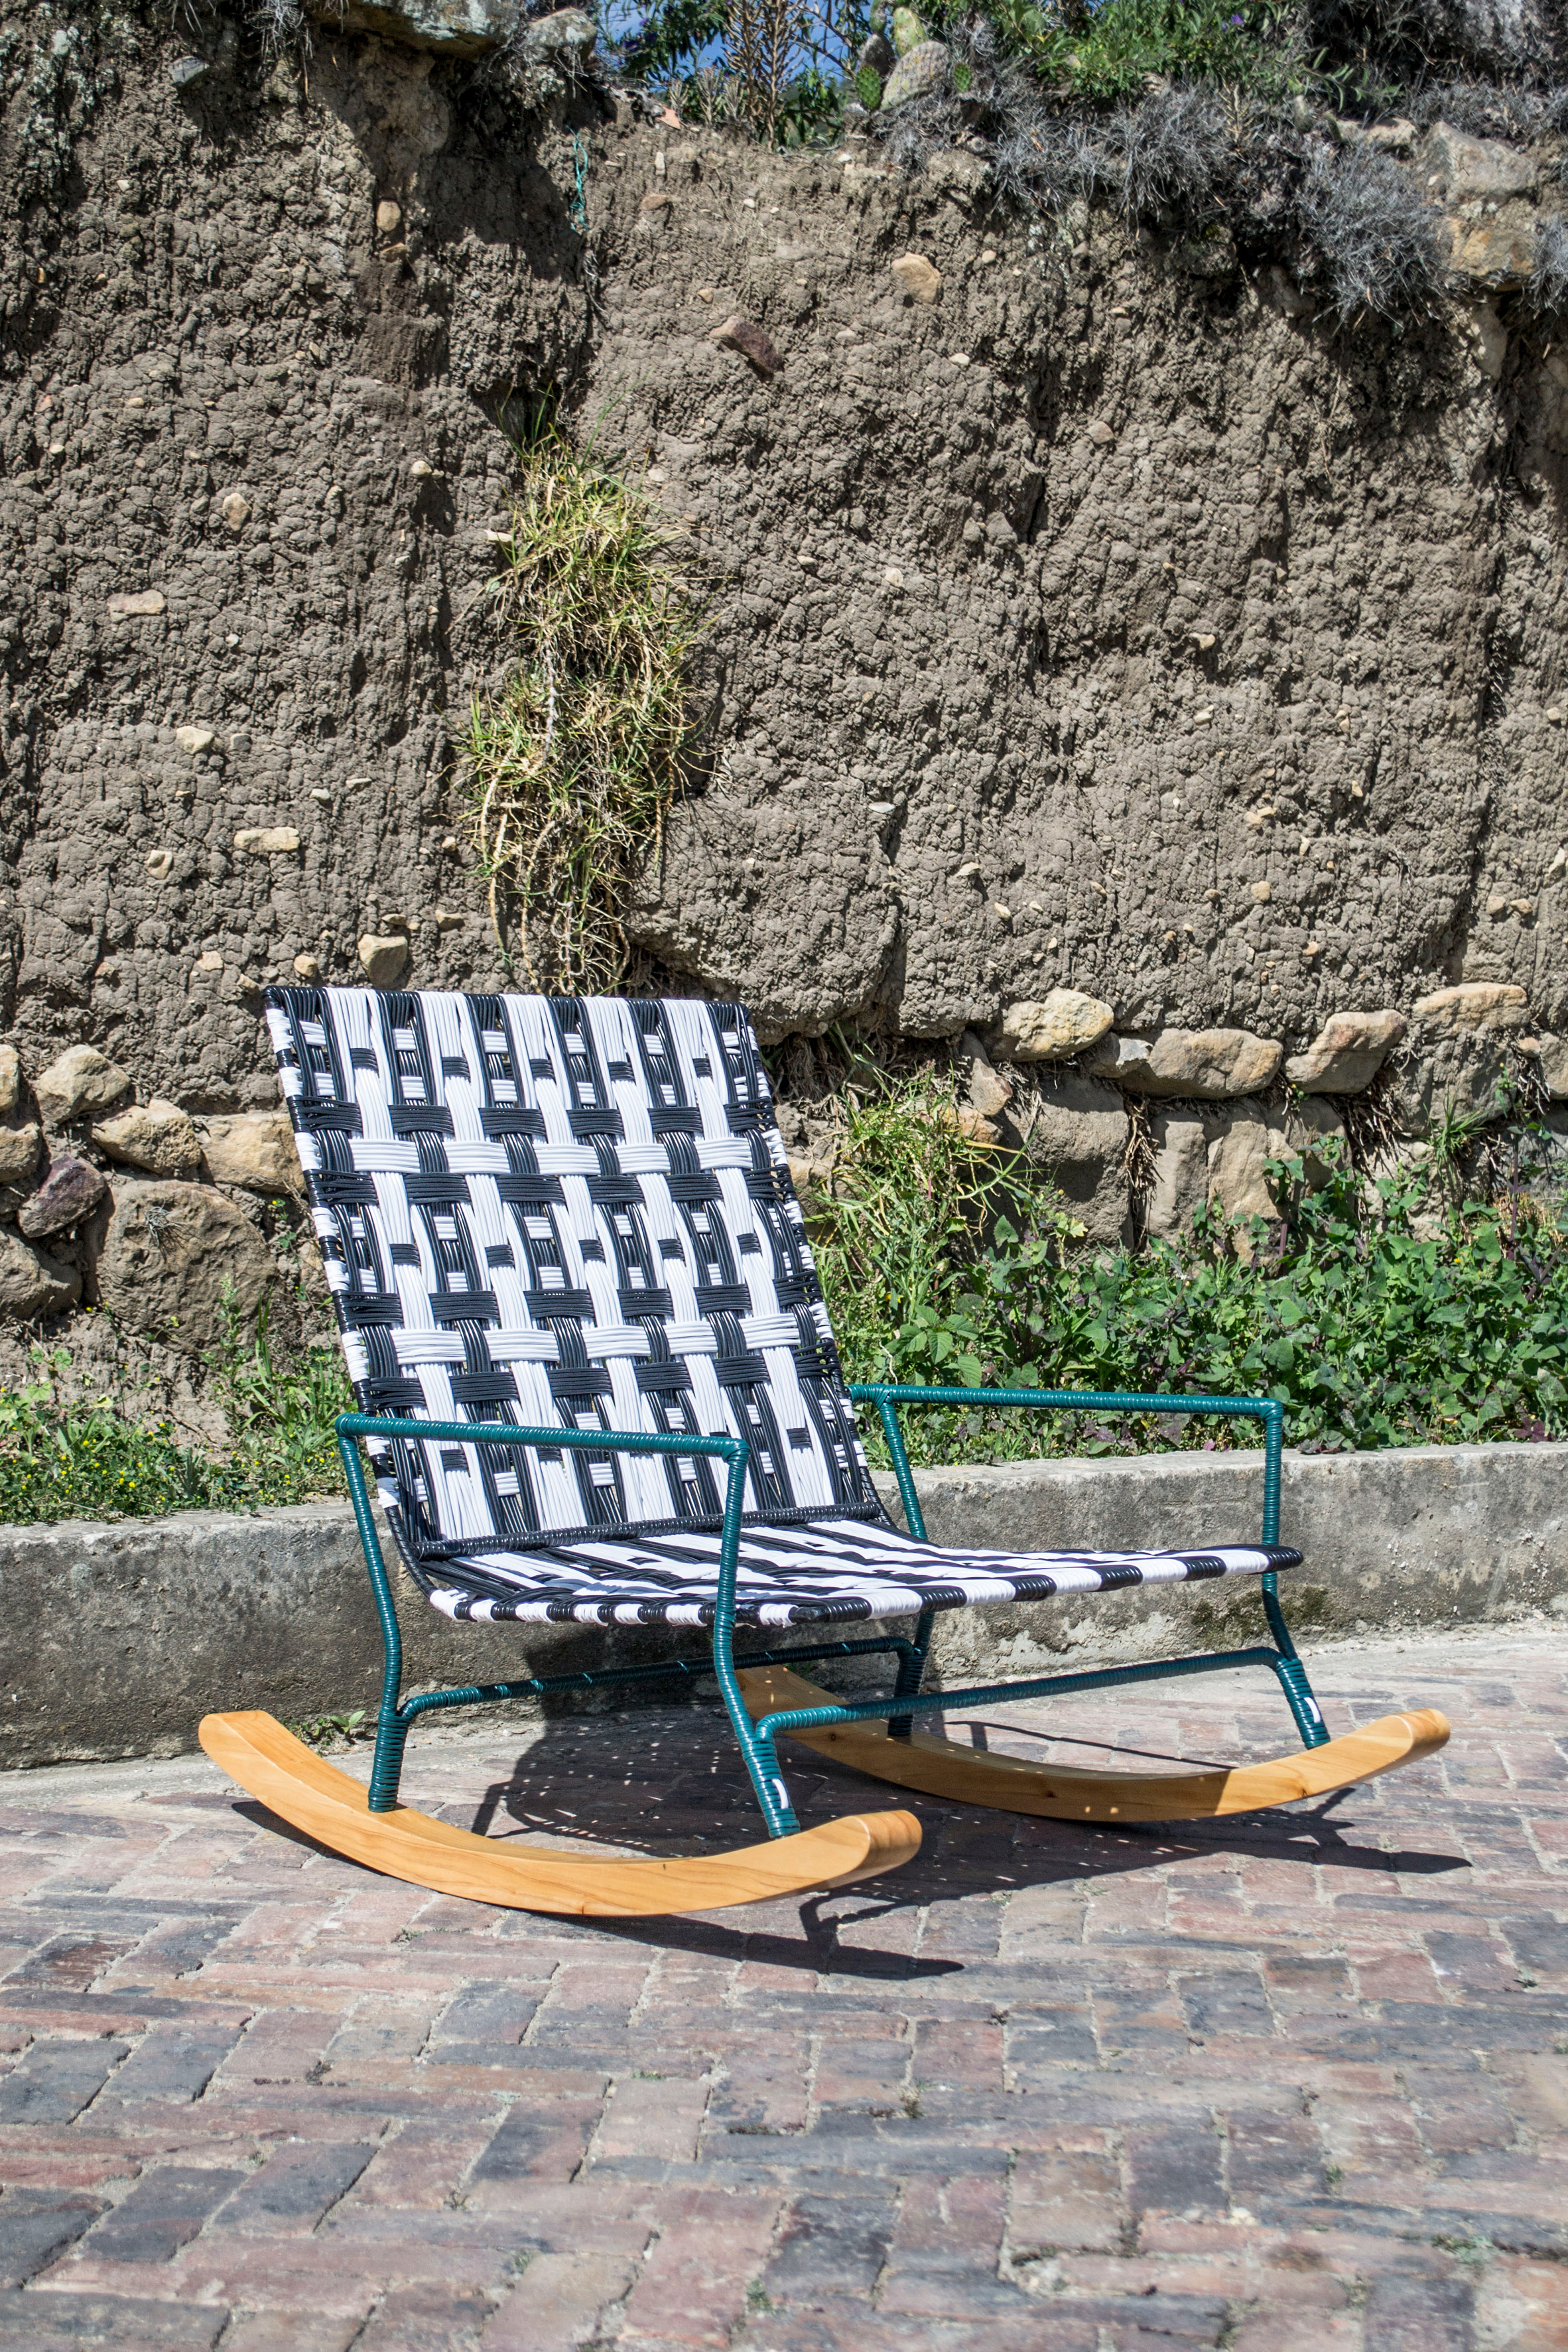 marni-playland-milan-design-week-furniture-toys-weaving-installation-chairs-_dezeen_2364_col_7